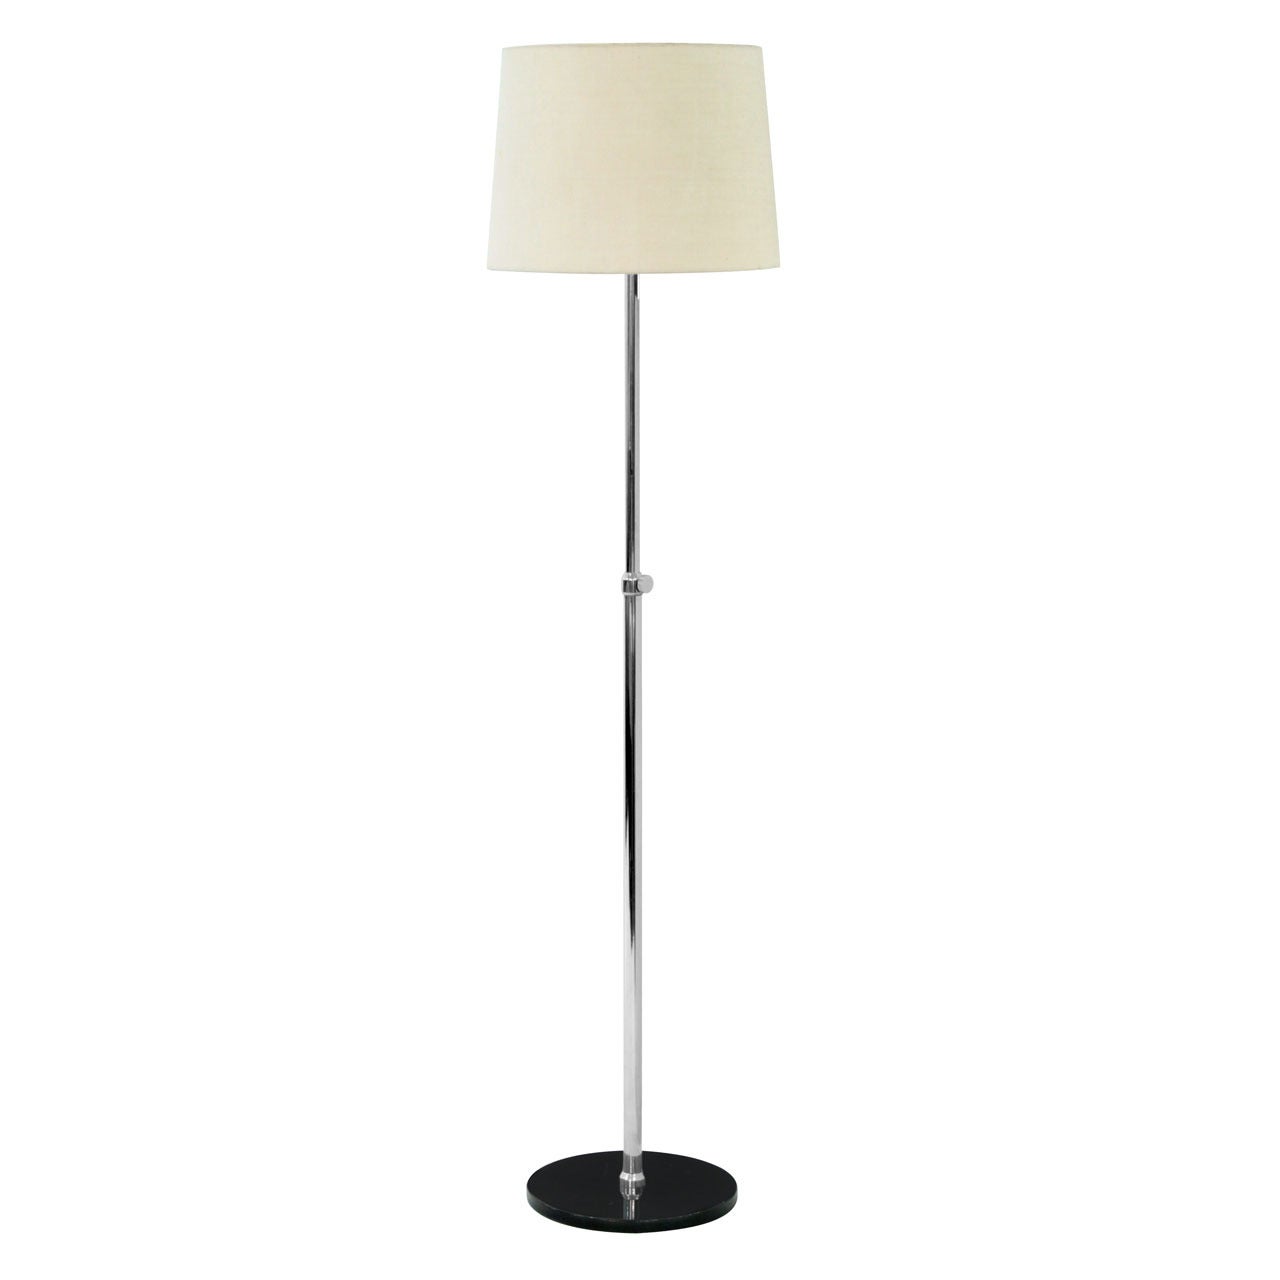 Adjustable Polished Steel Floor Lamp by Arredoluce